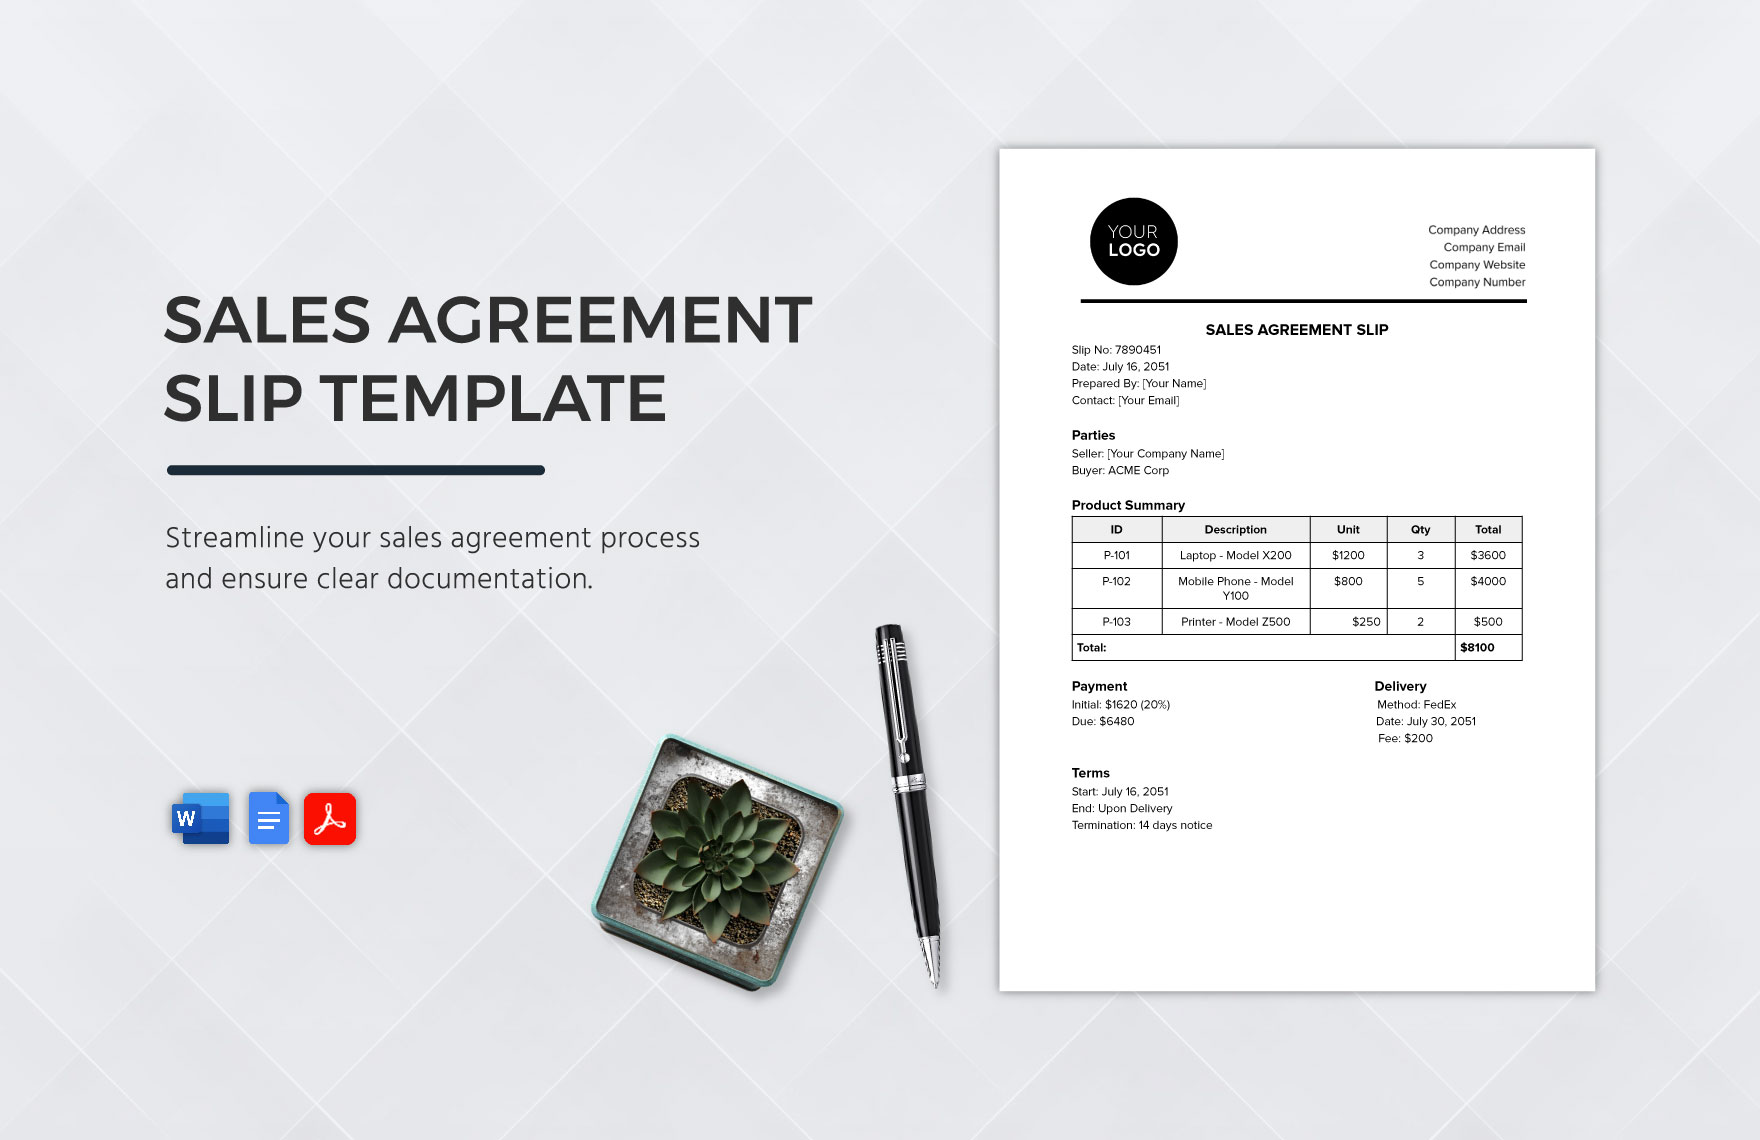 Sales Agreement Slip Template in Word, Google Docs, PDF